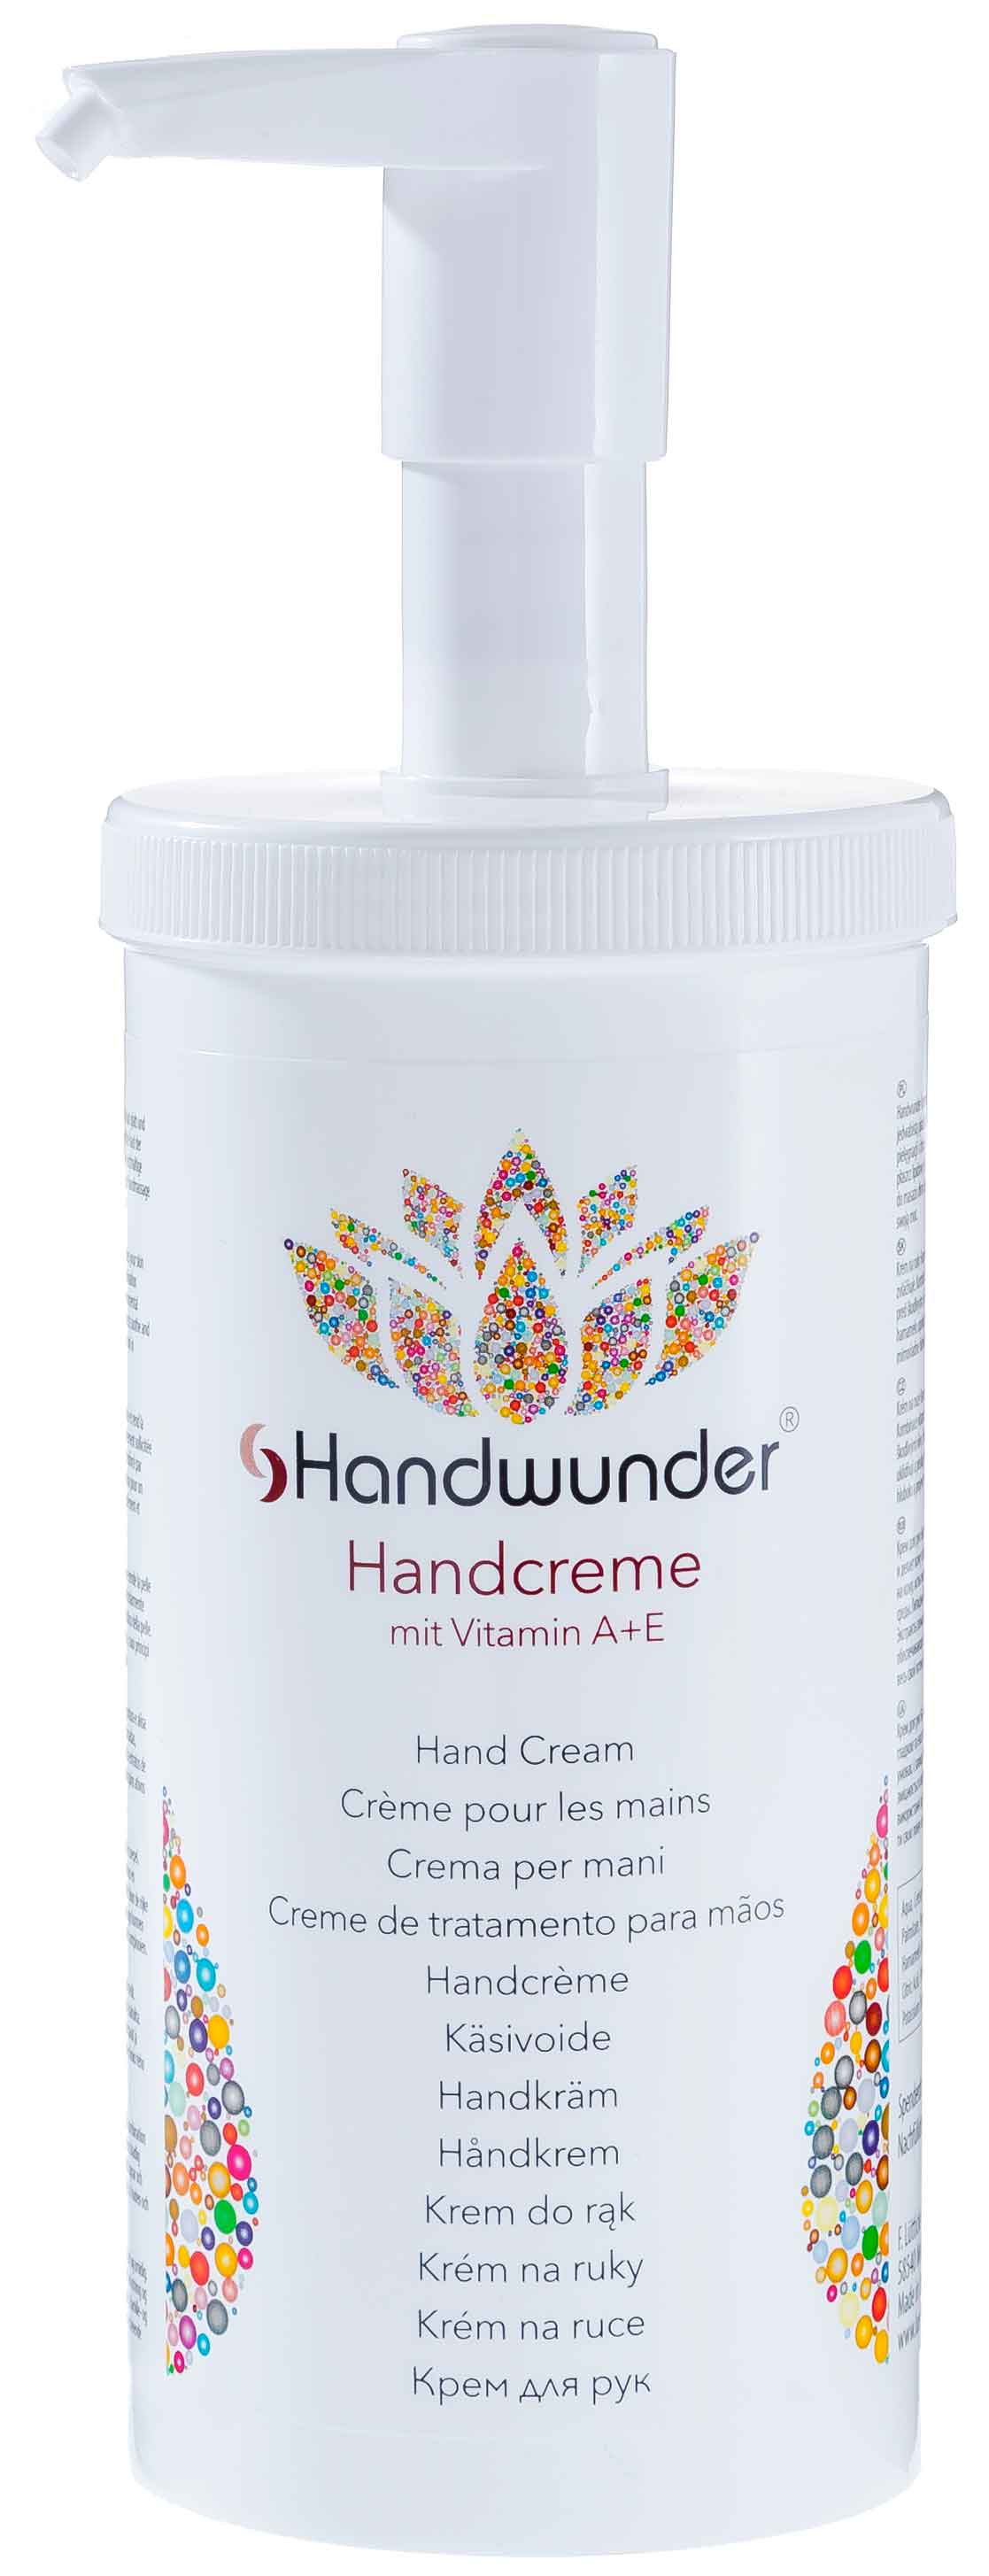 Handwunder Handcreme 450 ml Spenderdose